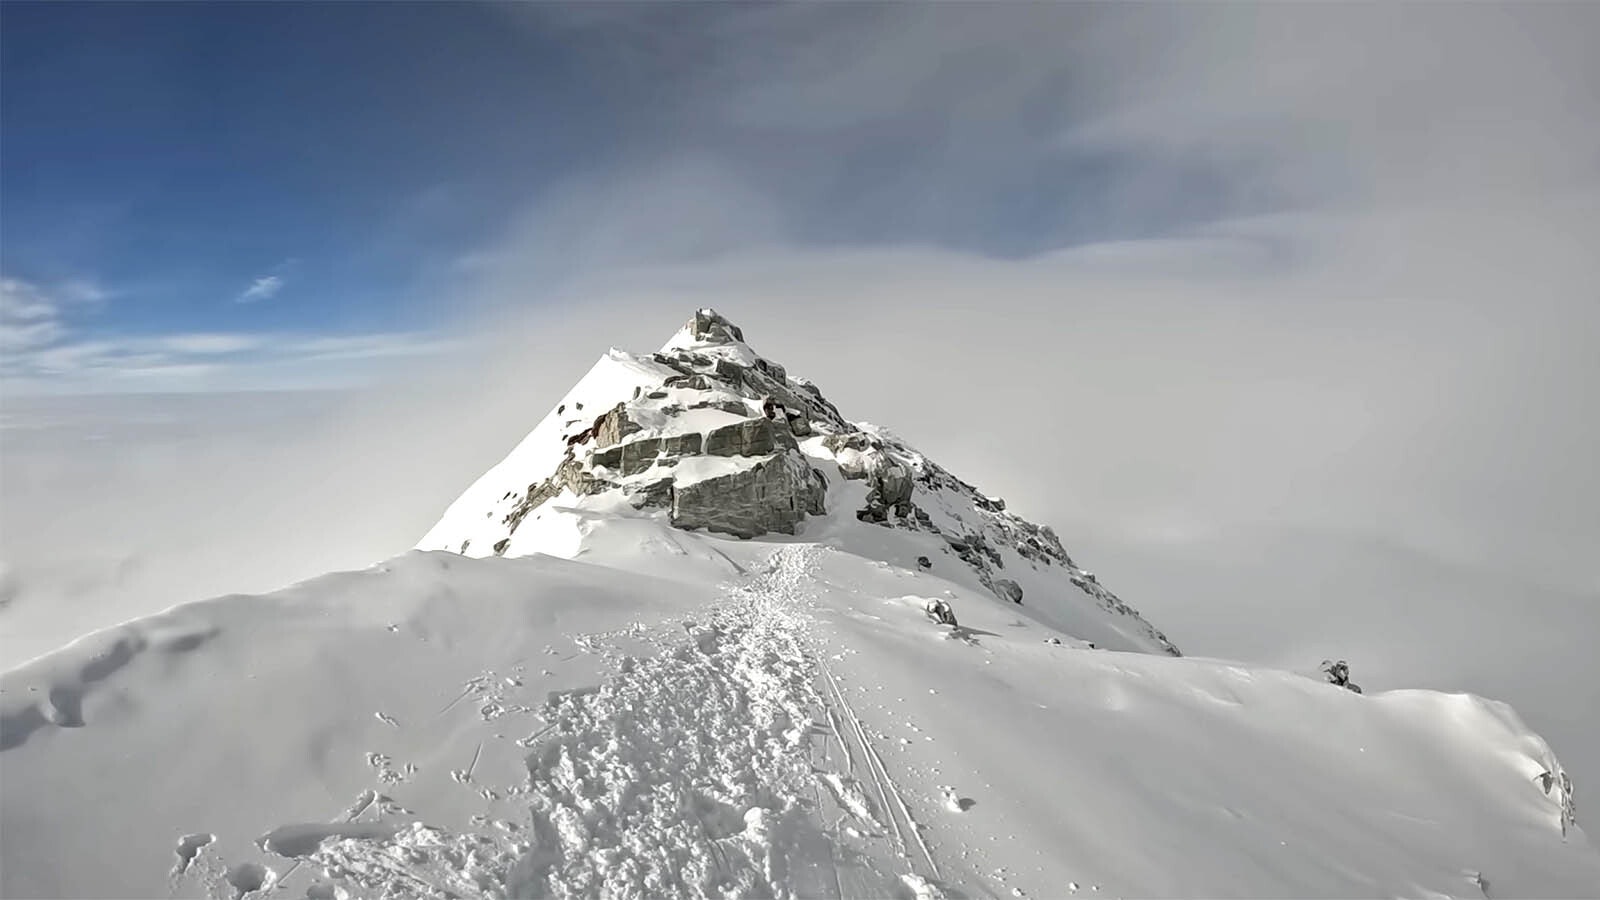 At 16,050 feet, Mount Vinson is the tallest peak in Antarctica.